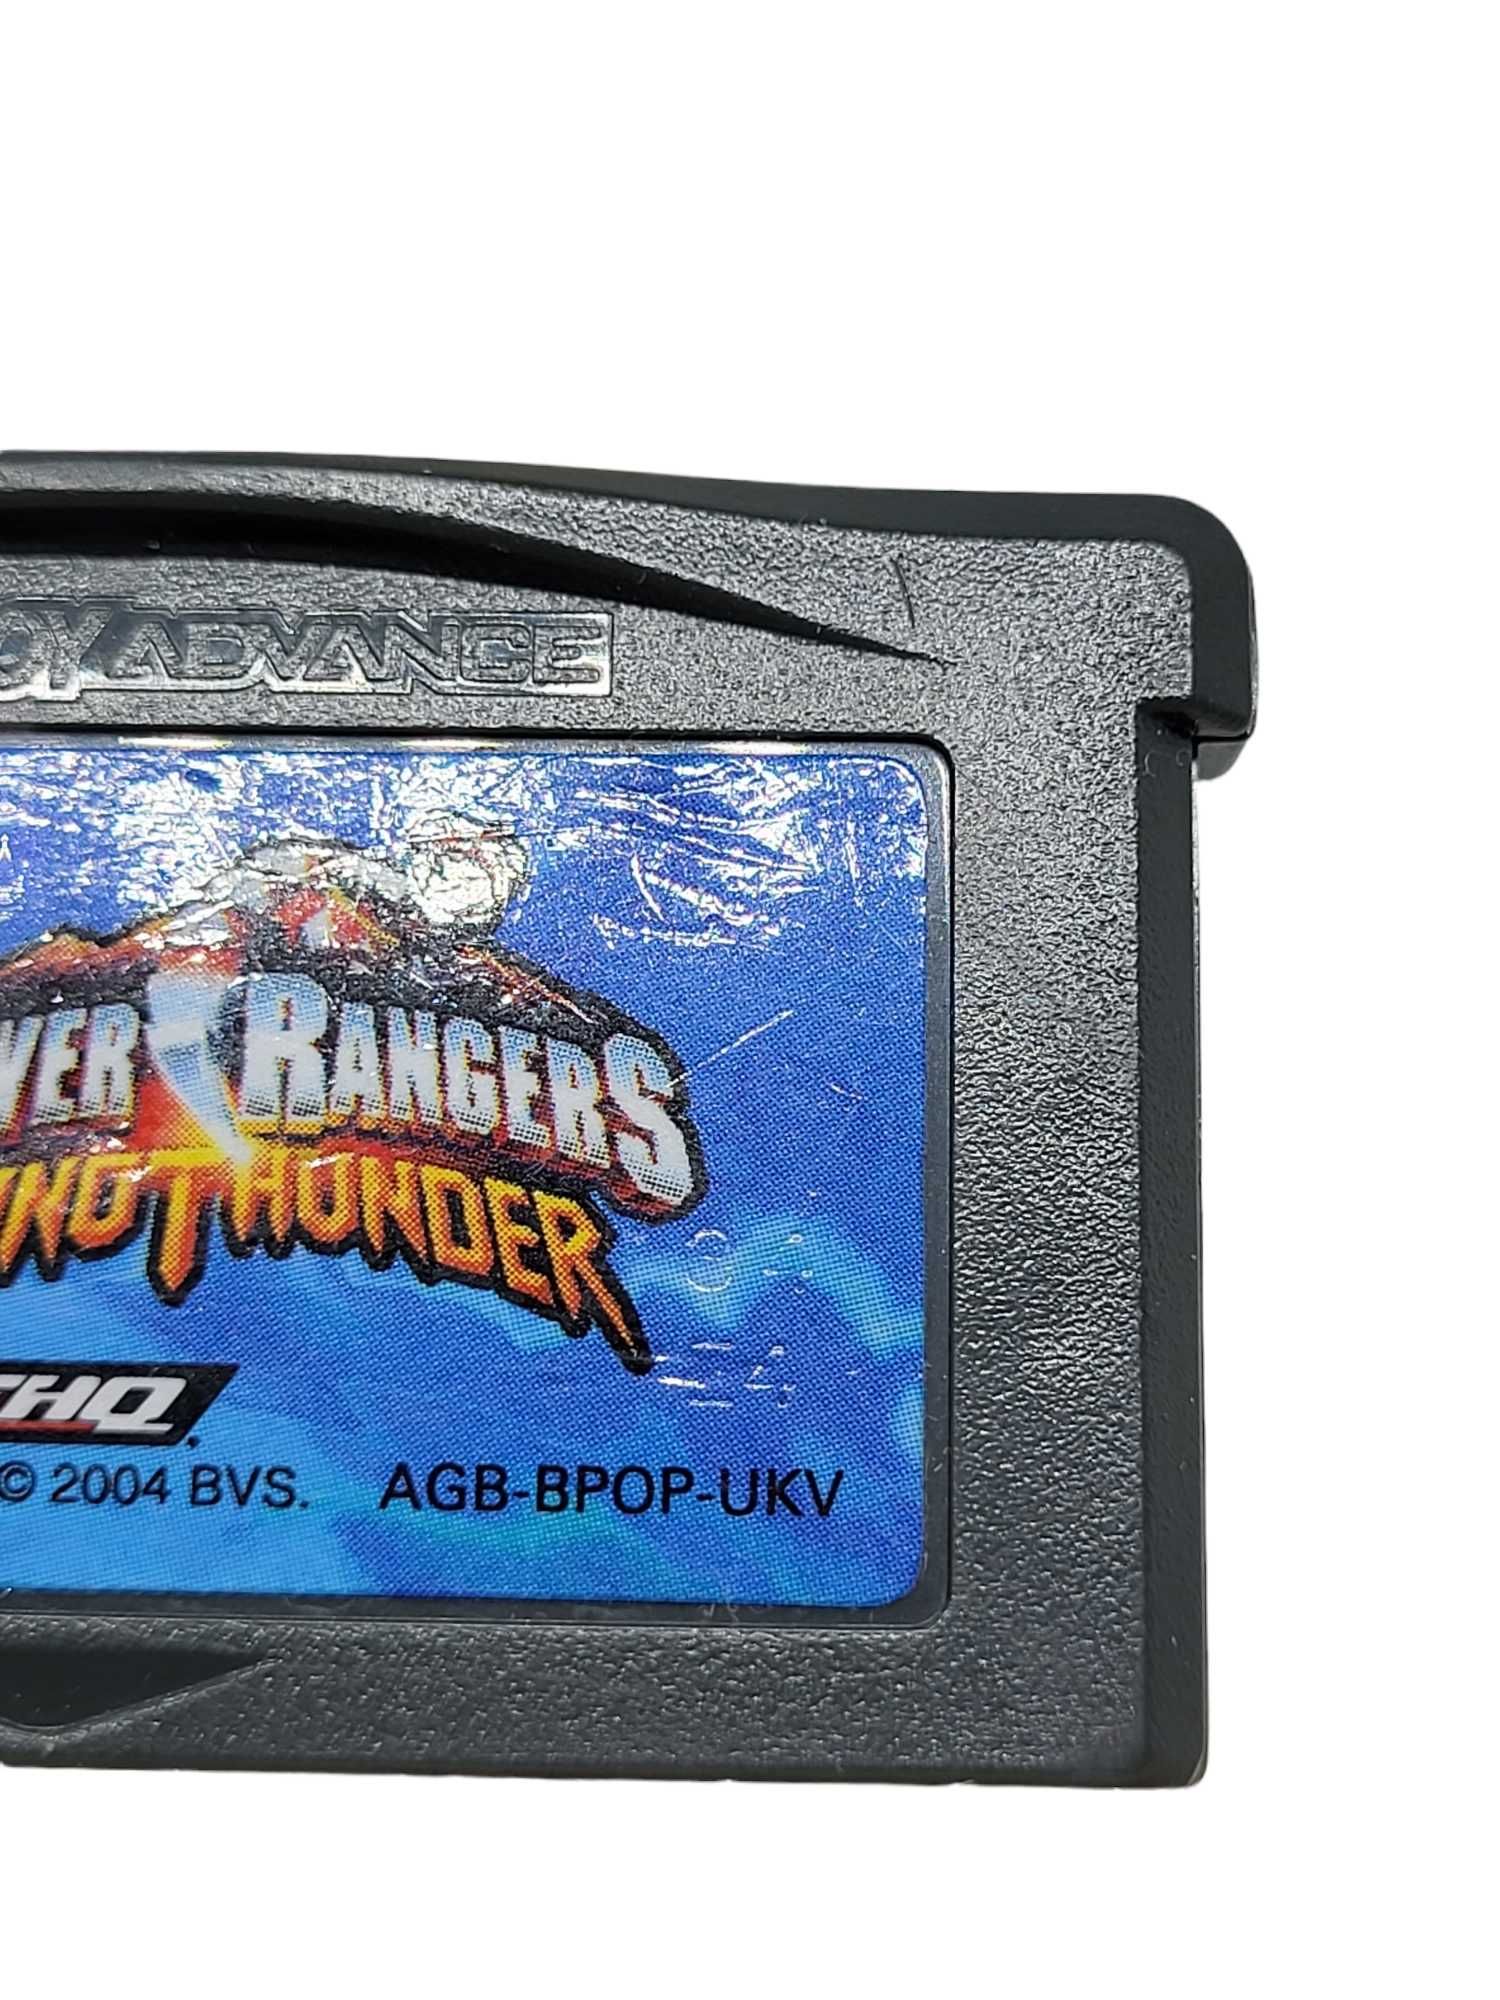 Power Rangers Game Boy Gameboy Advance GBA